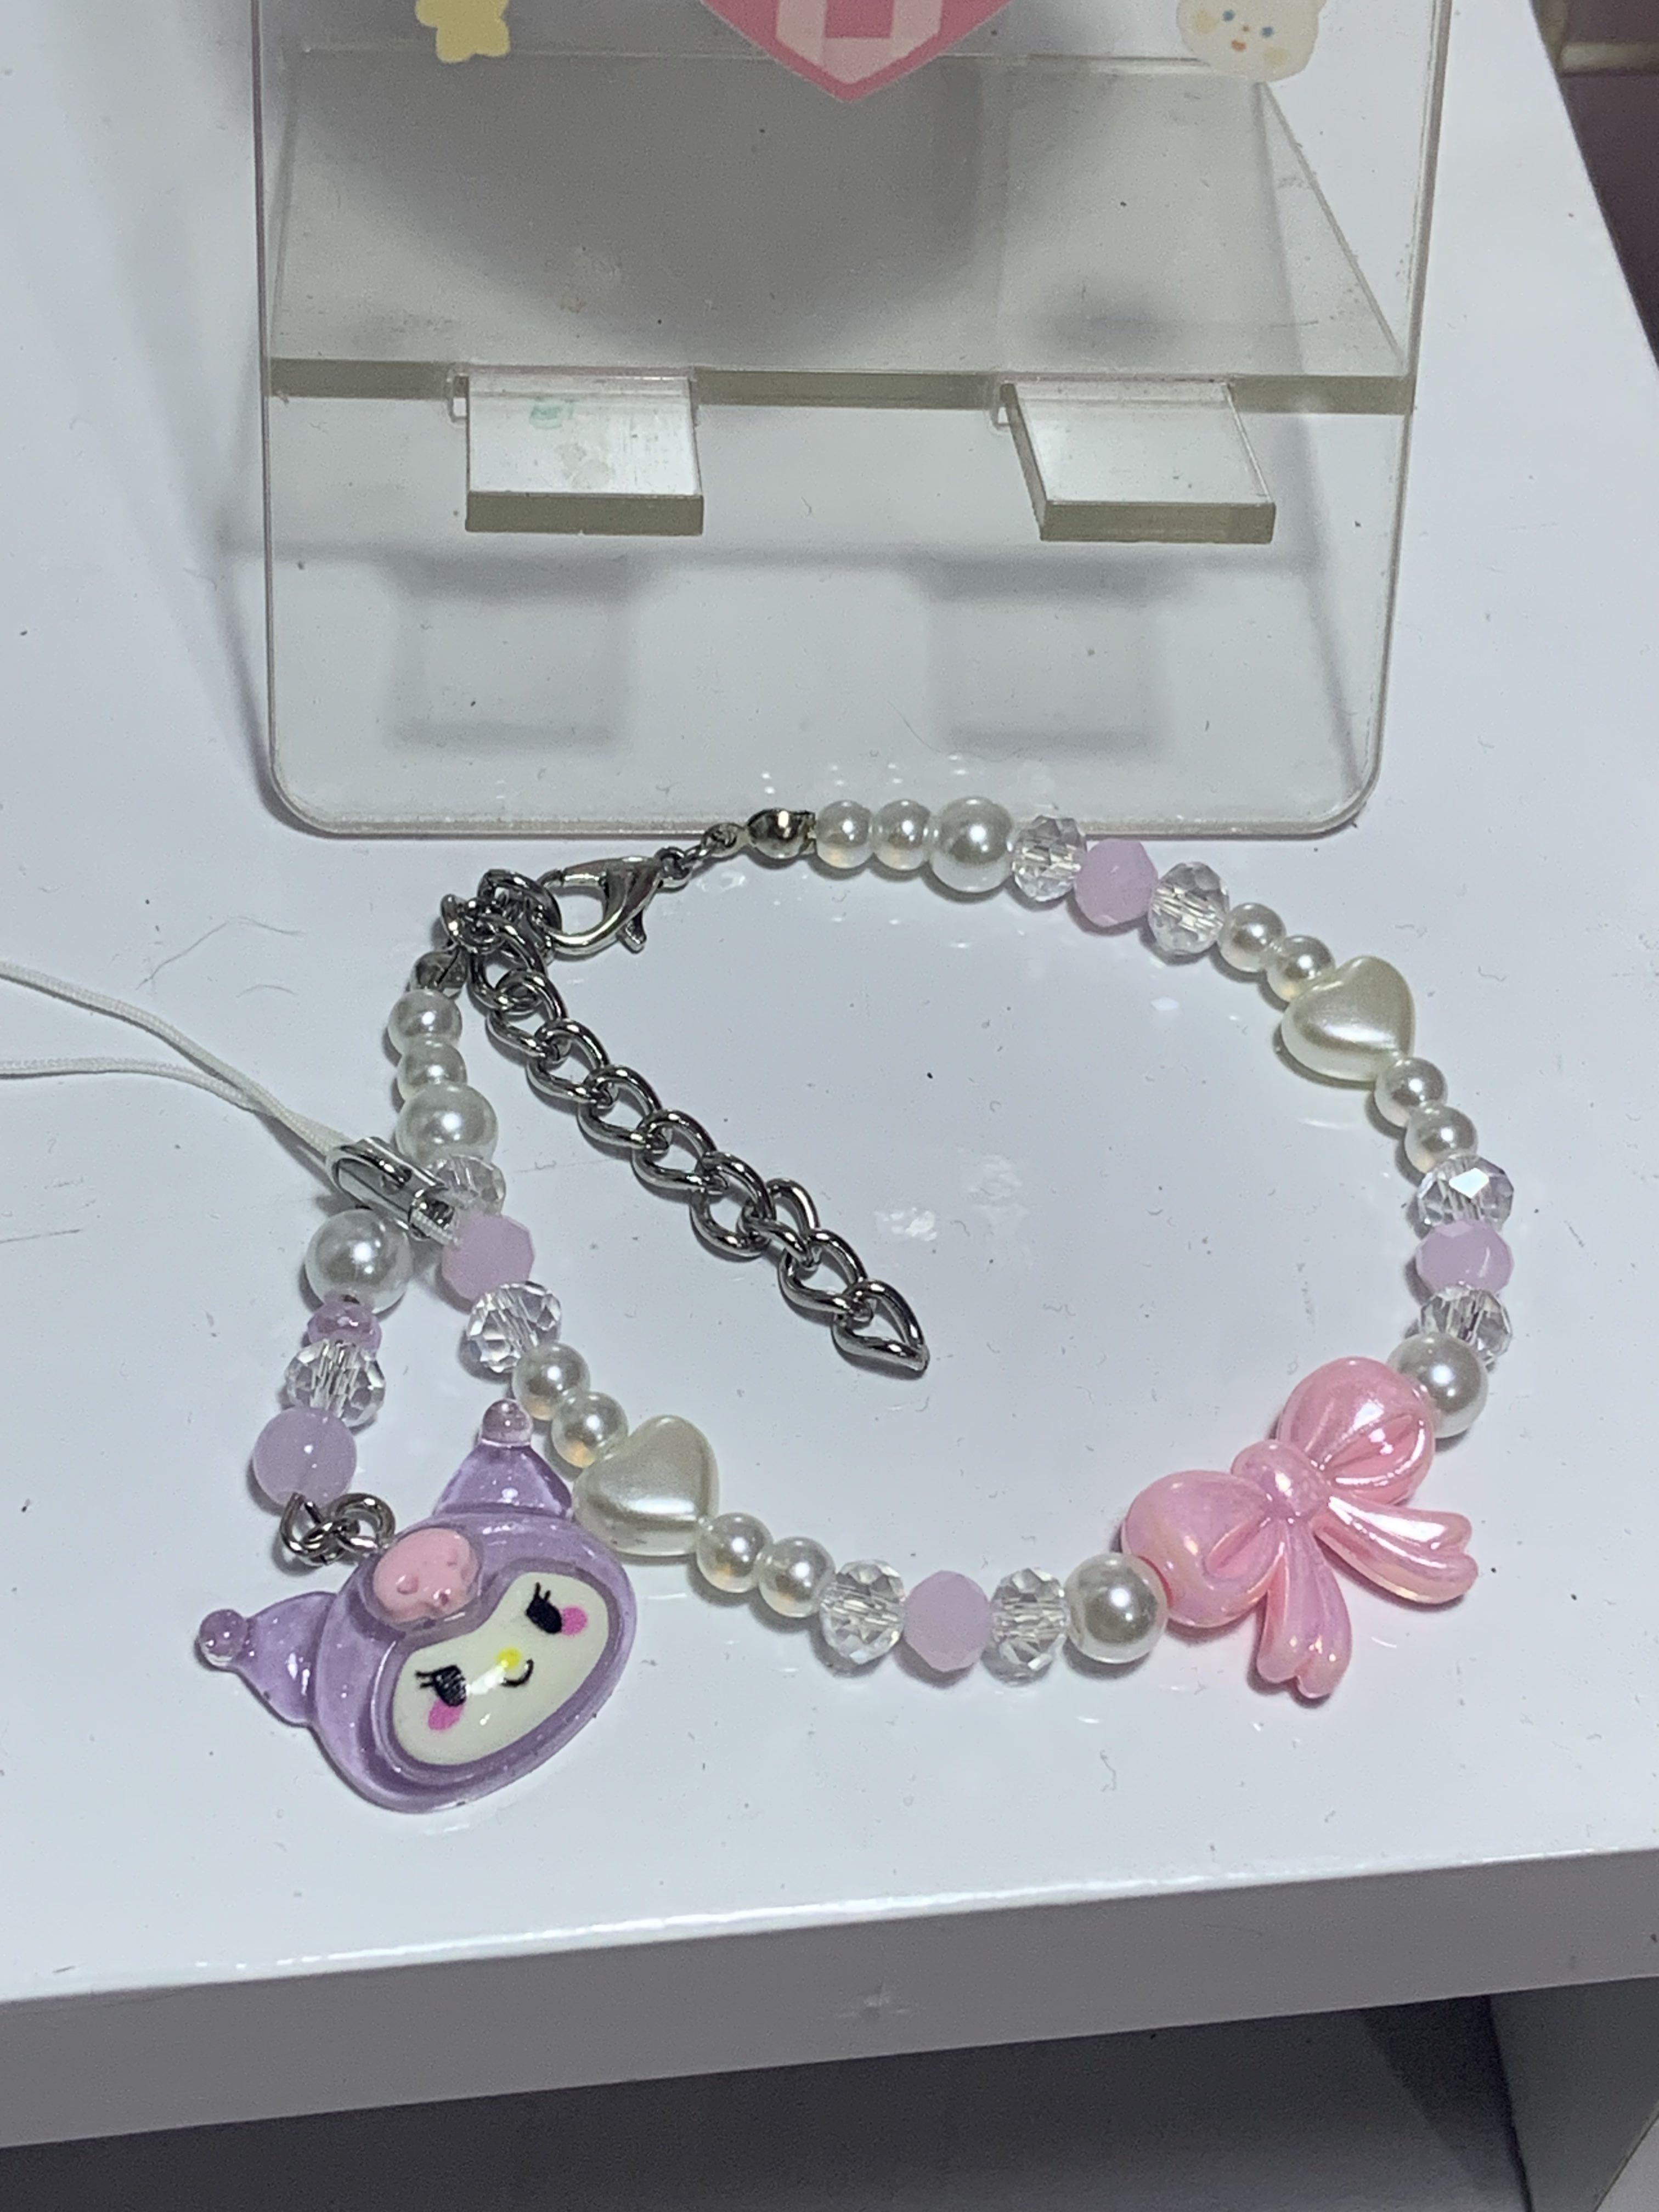 Jual COQUETTE Beads Stone Bracelet, Gelang Manik, Beads Bracelet, Gelang  Coquette, Gelang Y2K, Friendship Bracelet